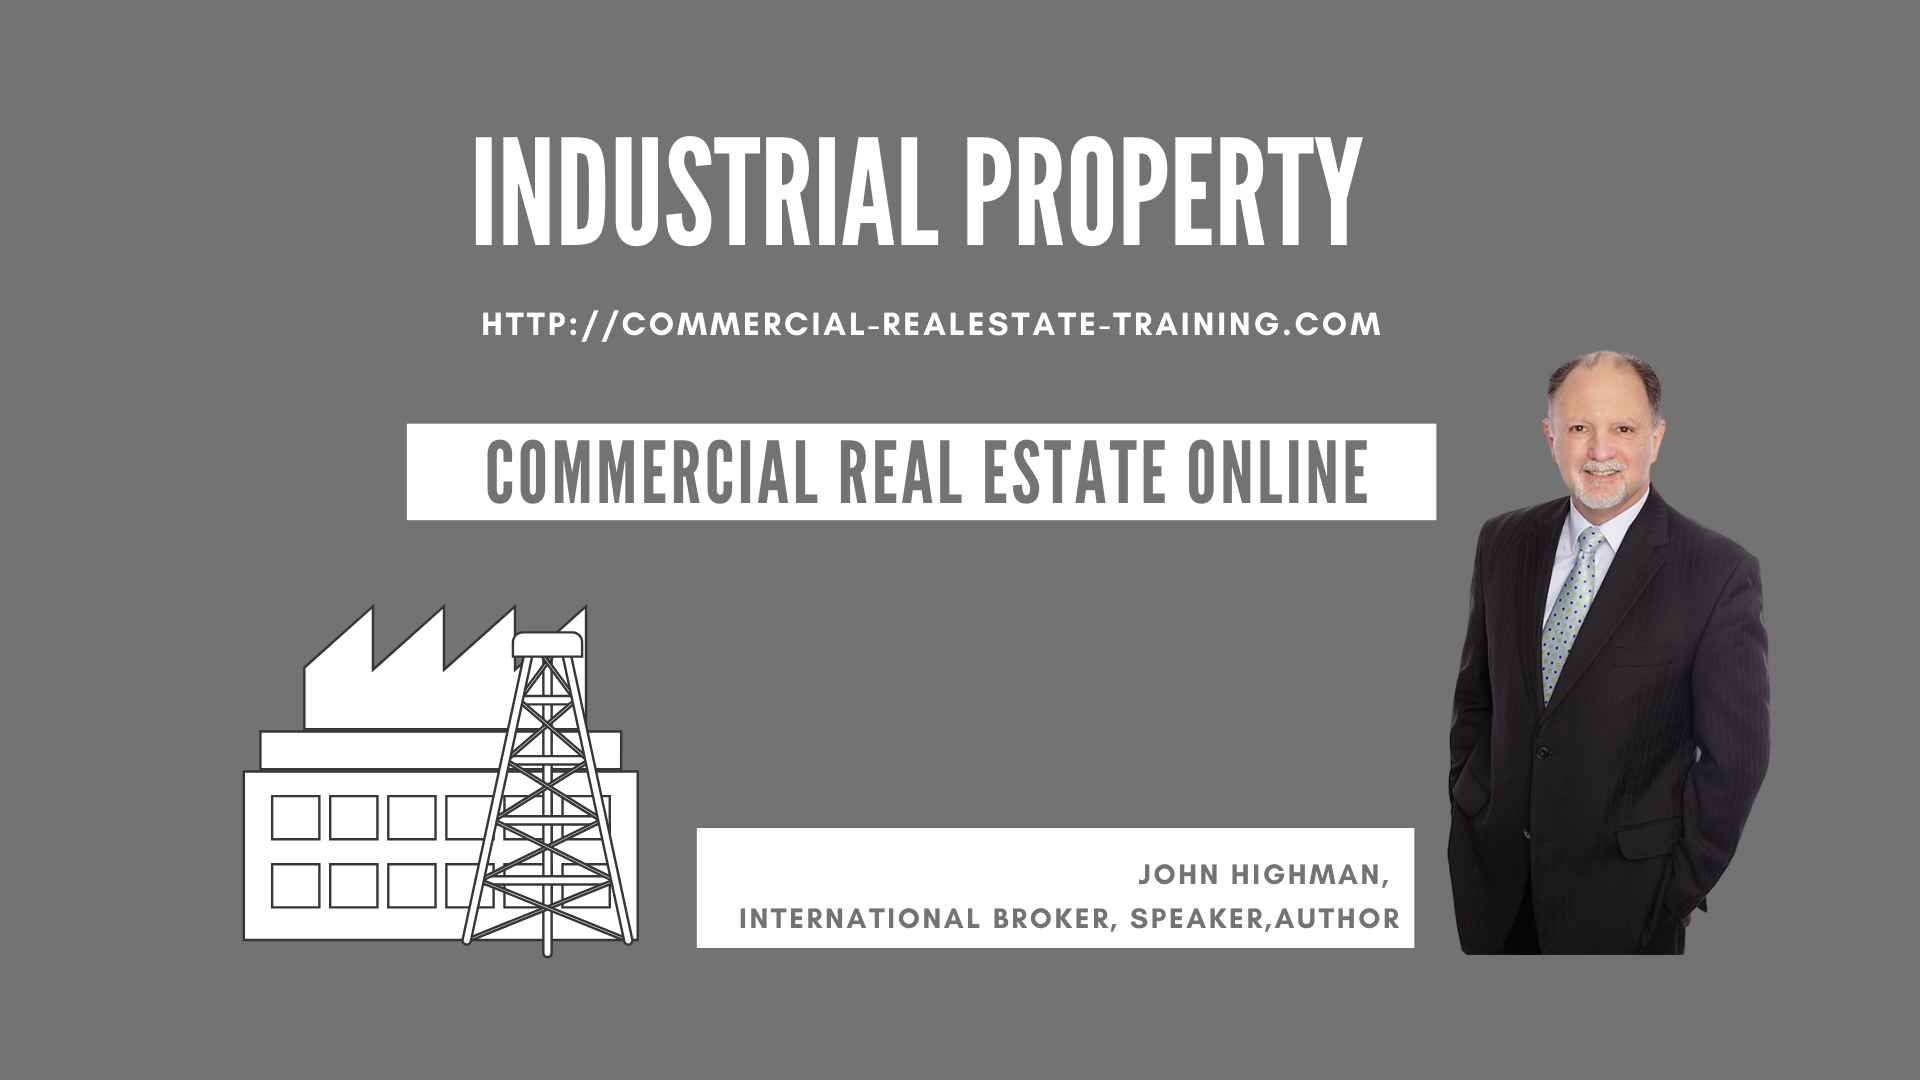 industrial property information by John Highman